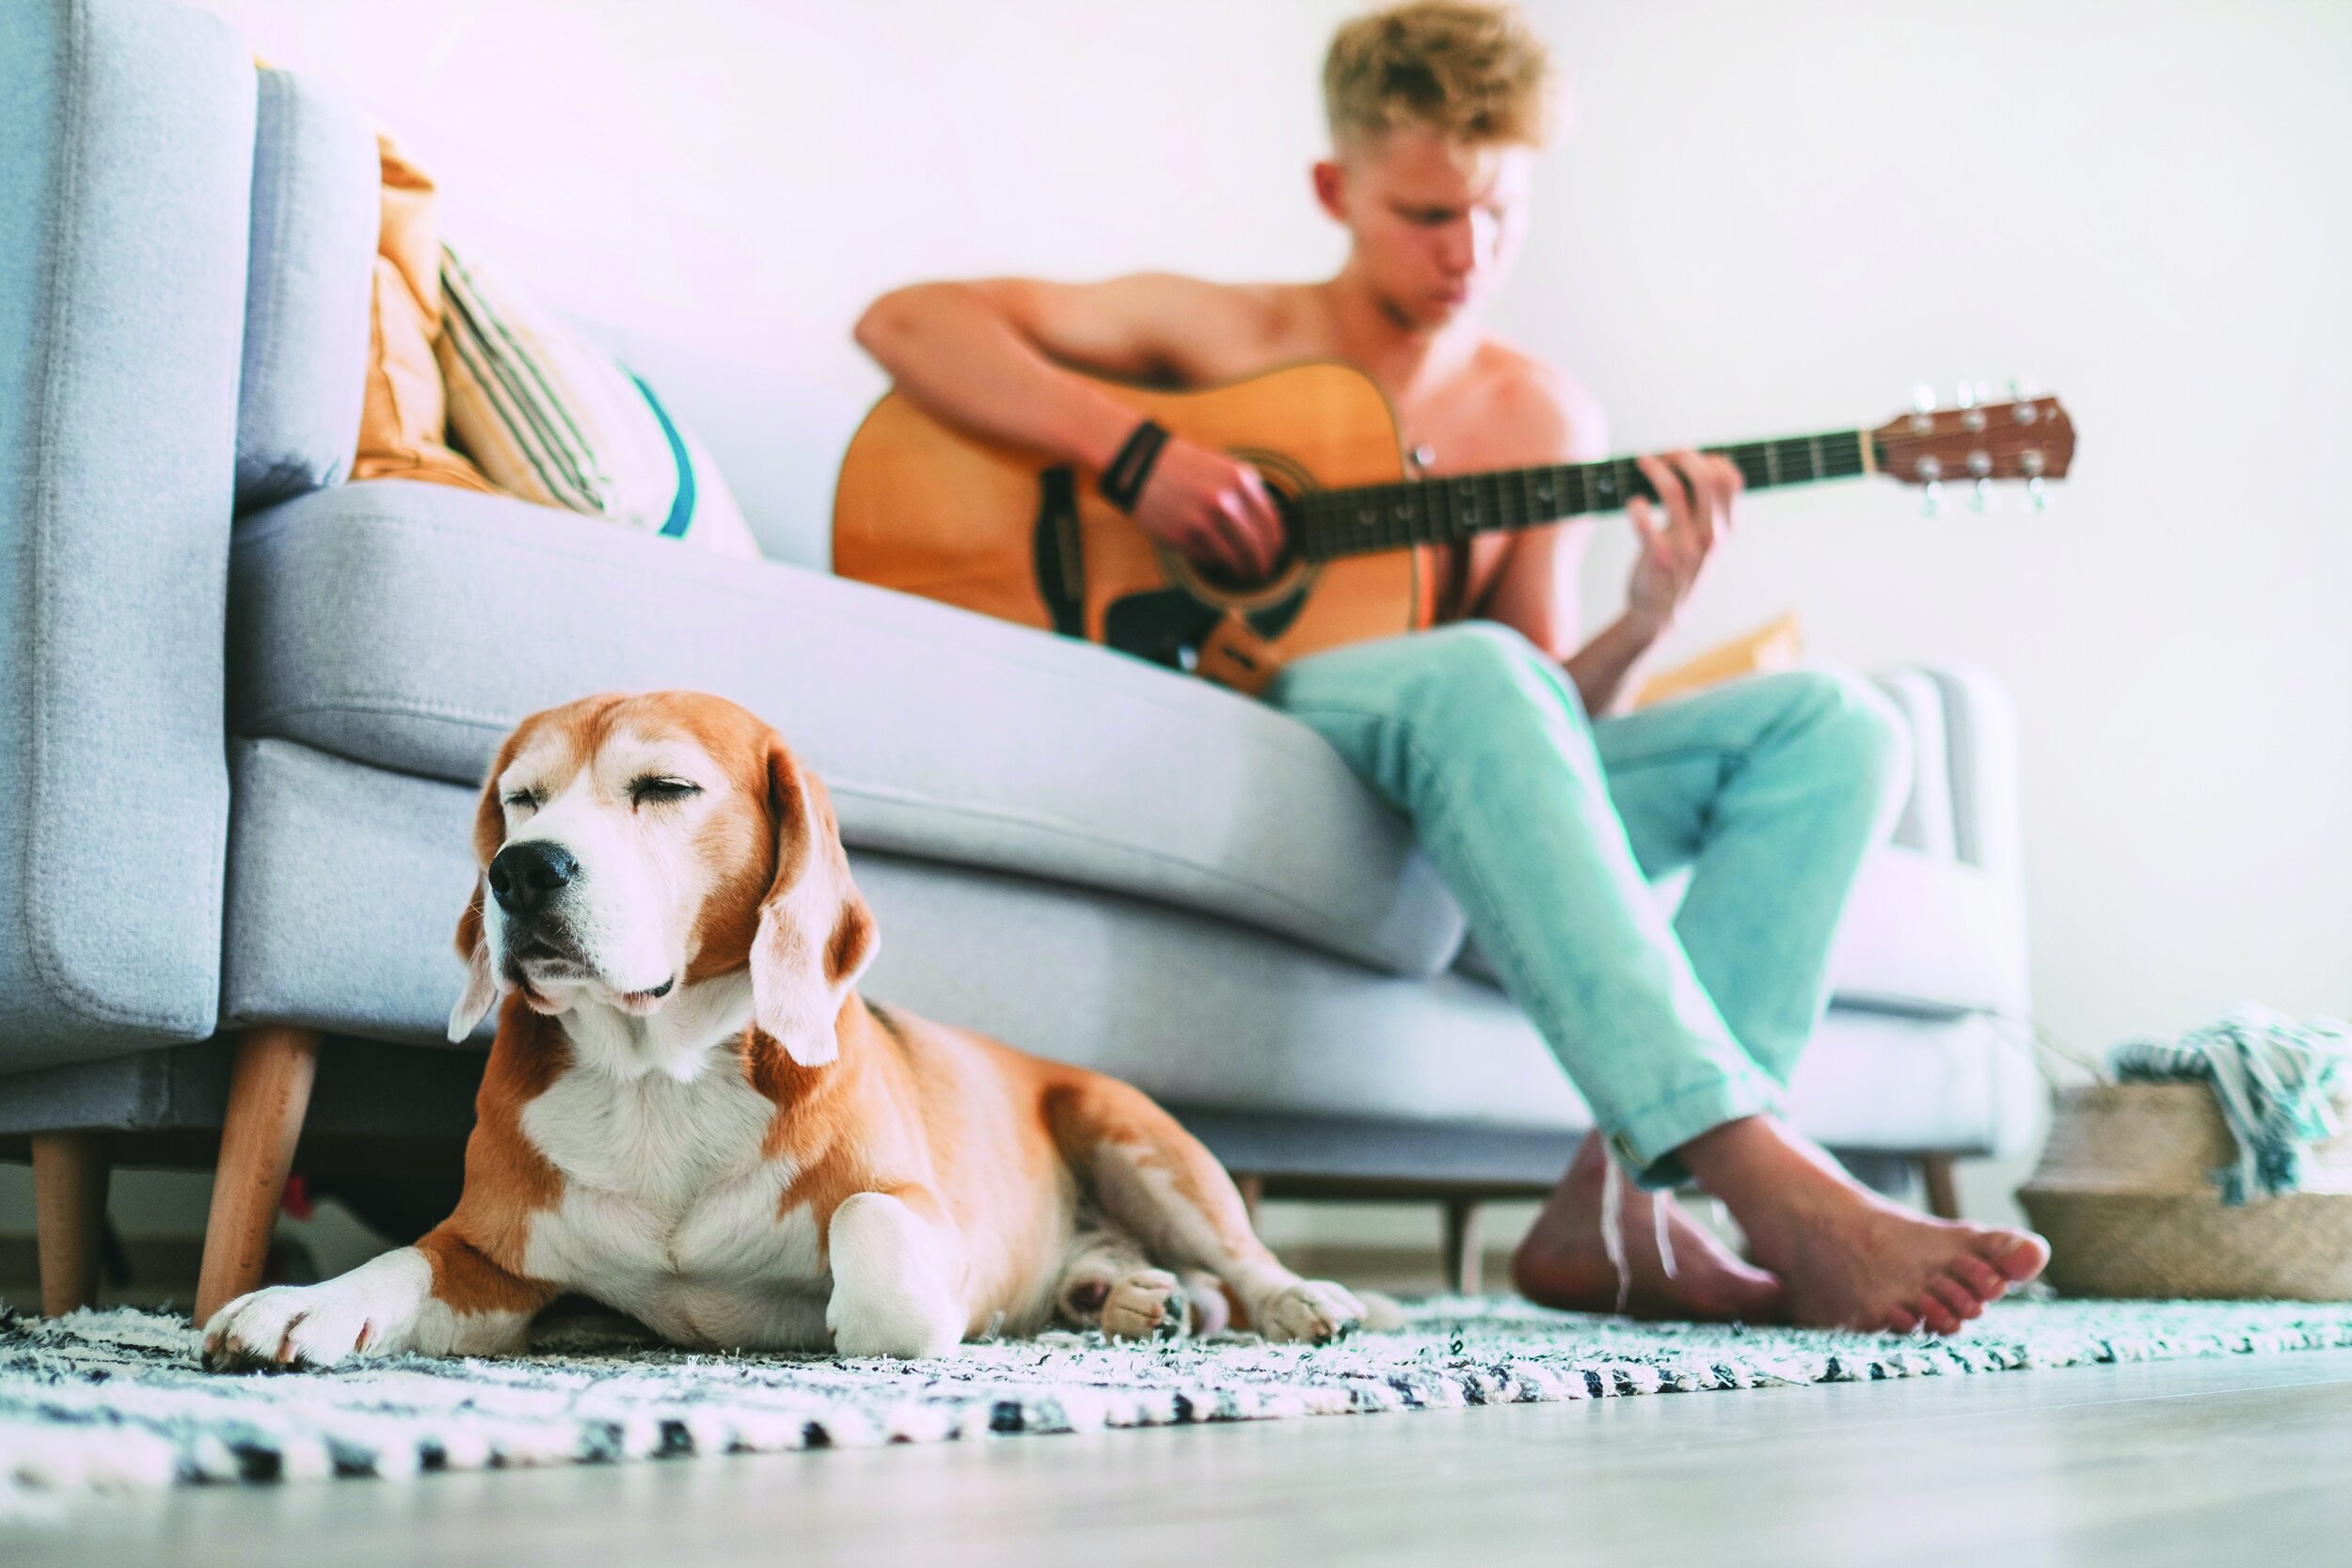 Beagle with boy + guitar_CMYK_iStock-980187058.jpg